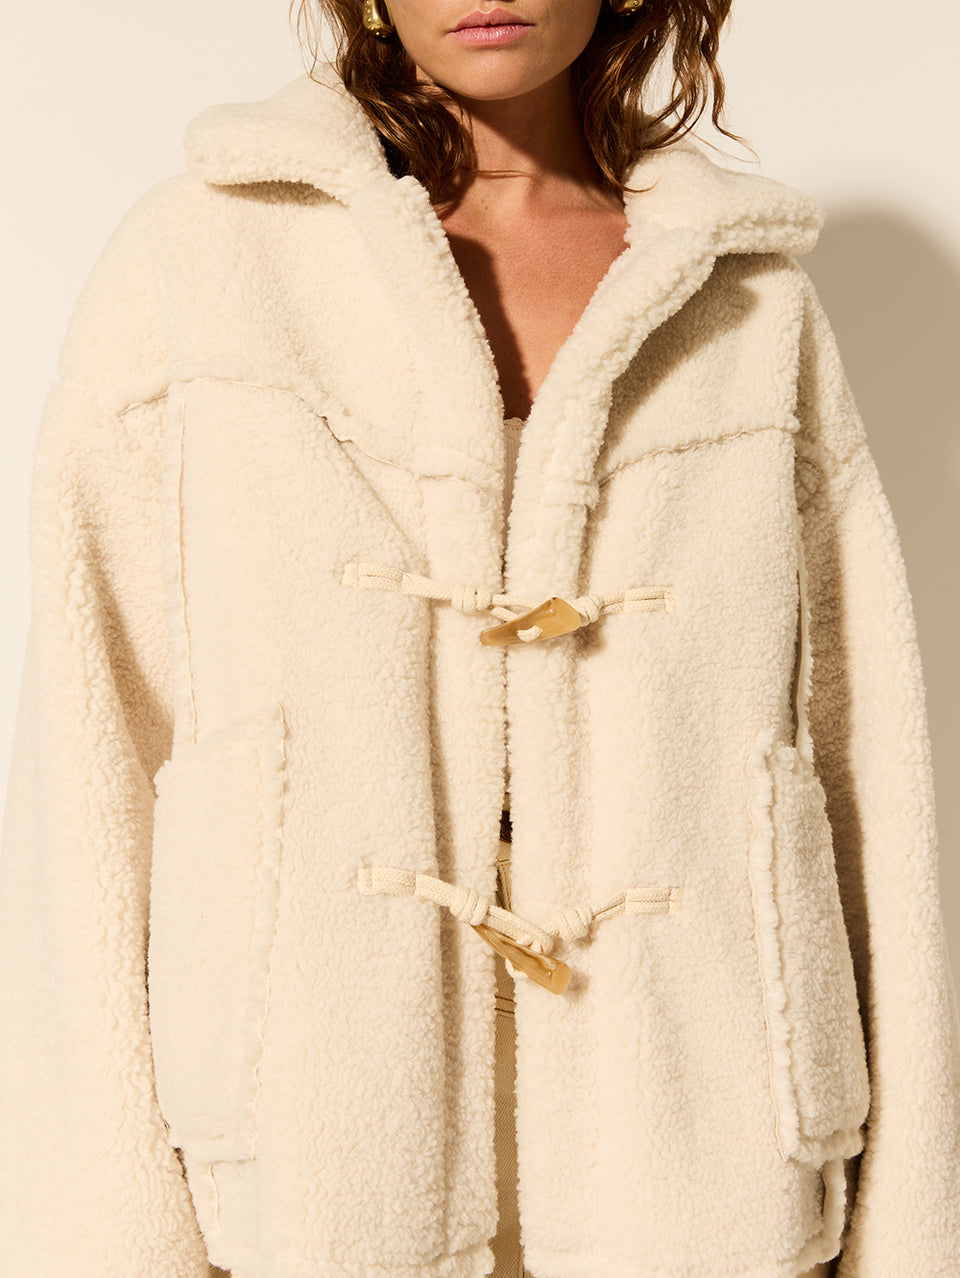 Lianna Jacket KIVARI | Model wears cream reversible jacket detail 